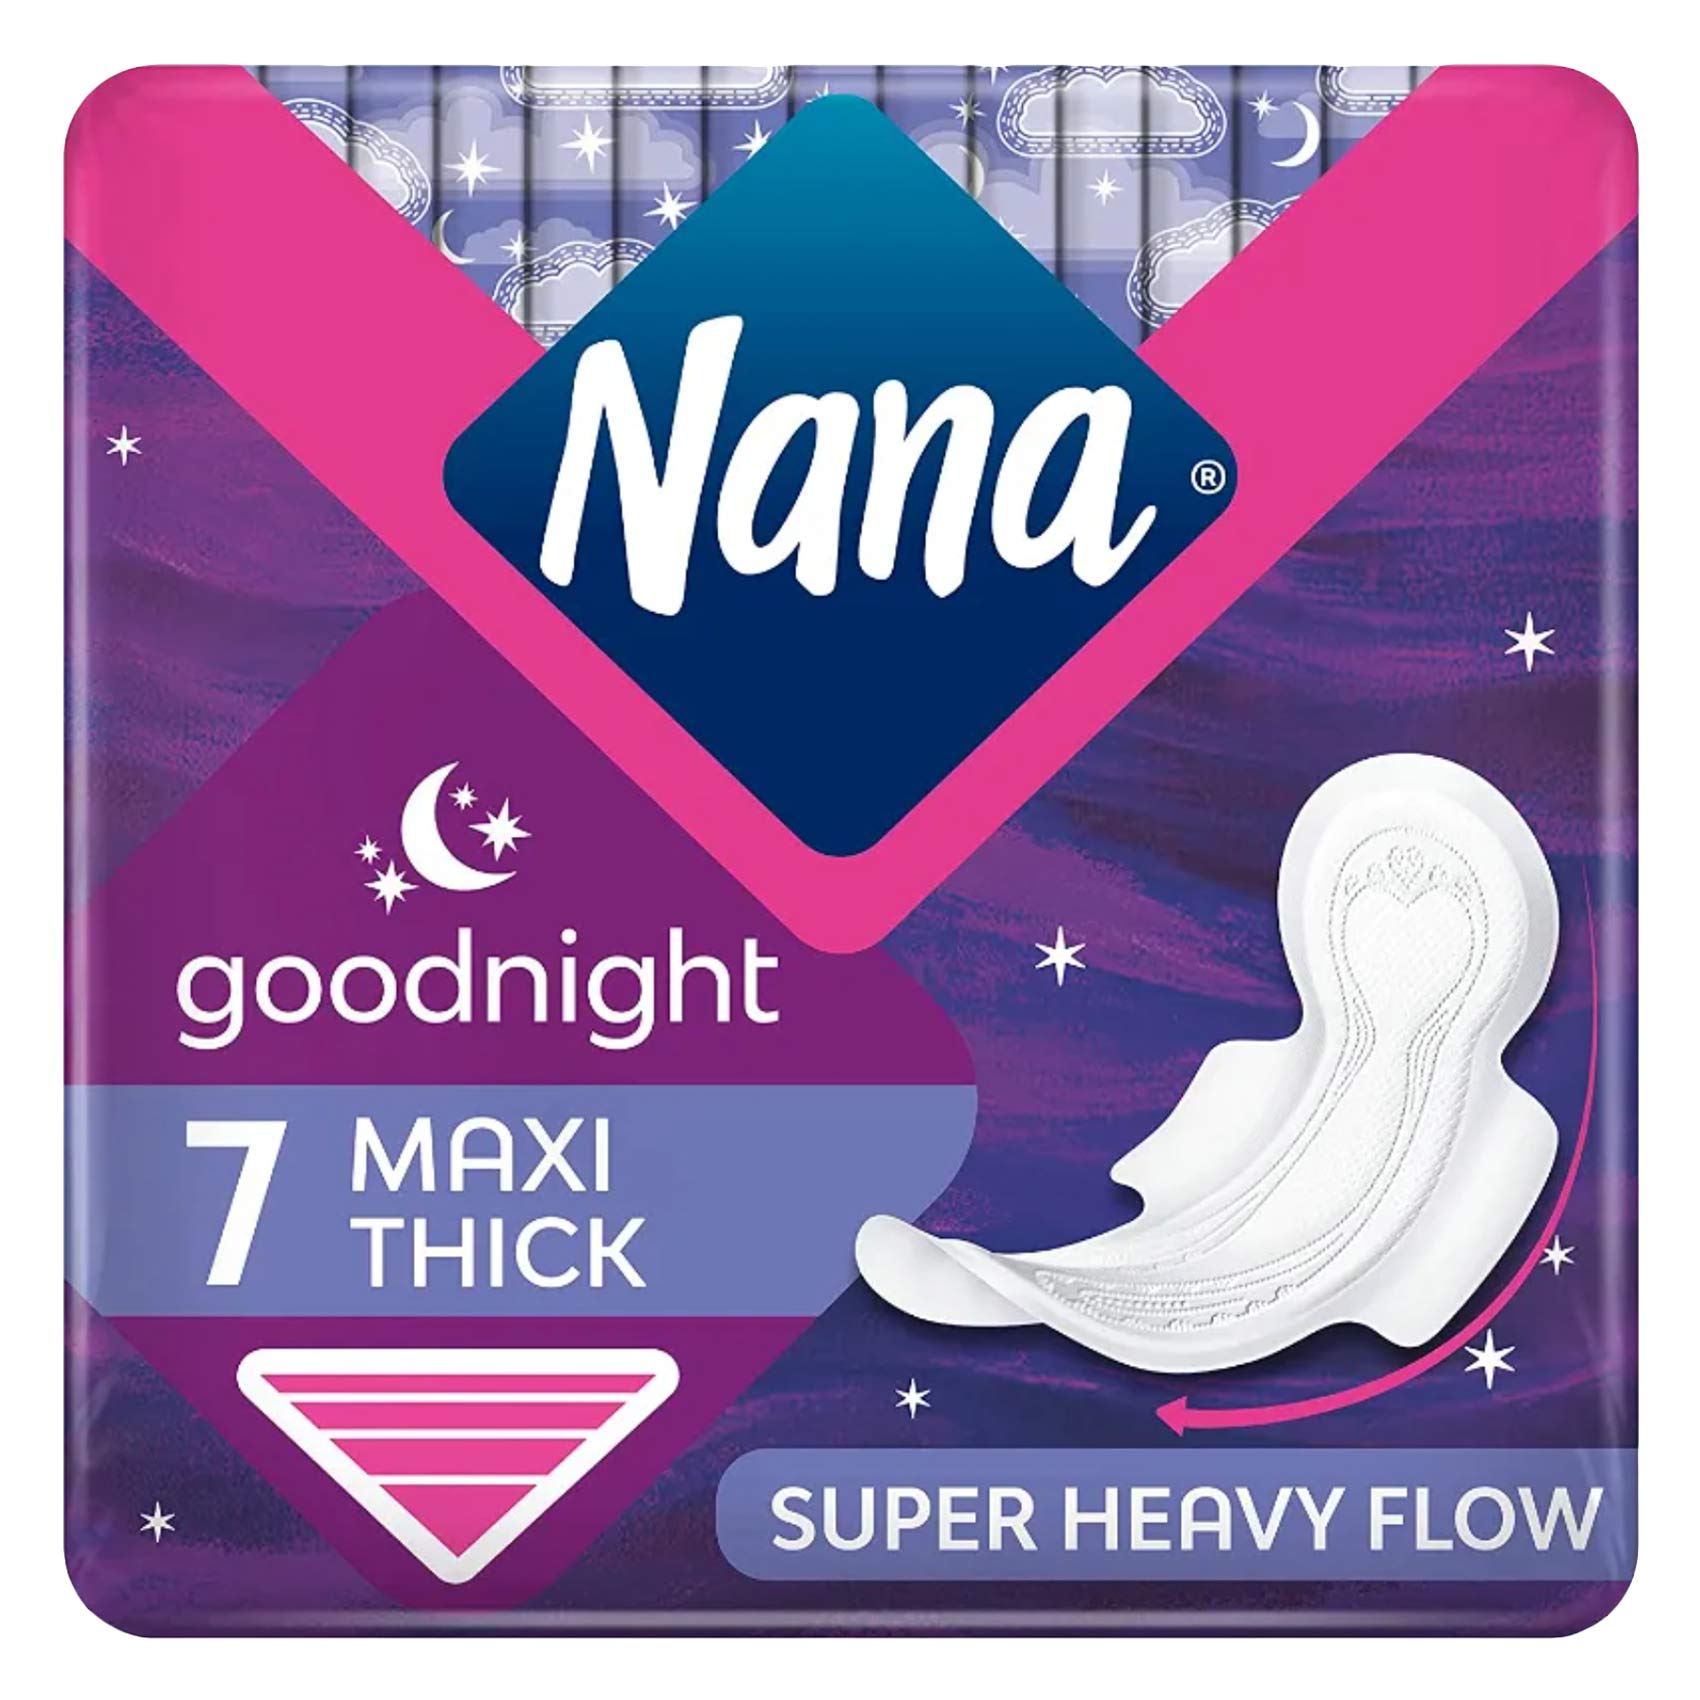 Nana Good Night Maxi Thick Sanitary Pads 7 Count